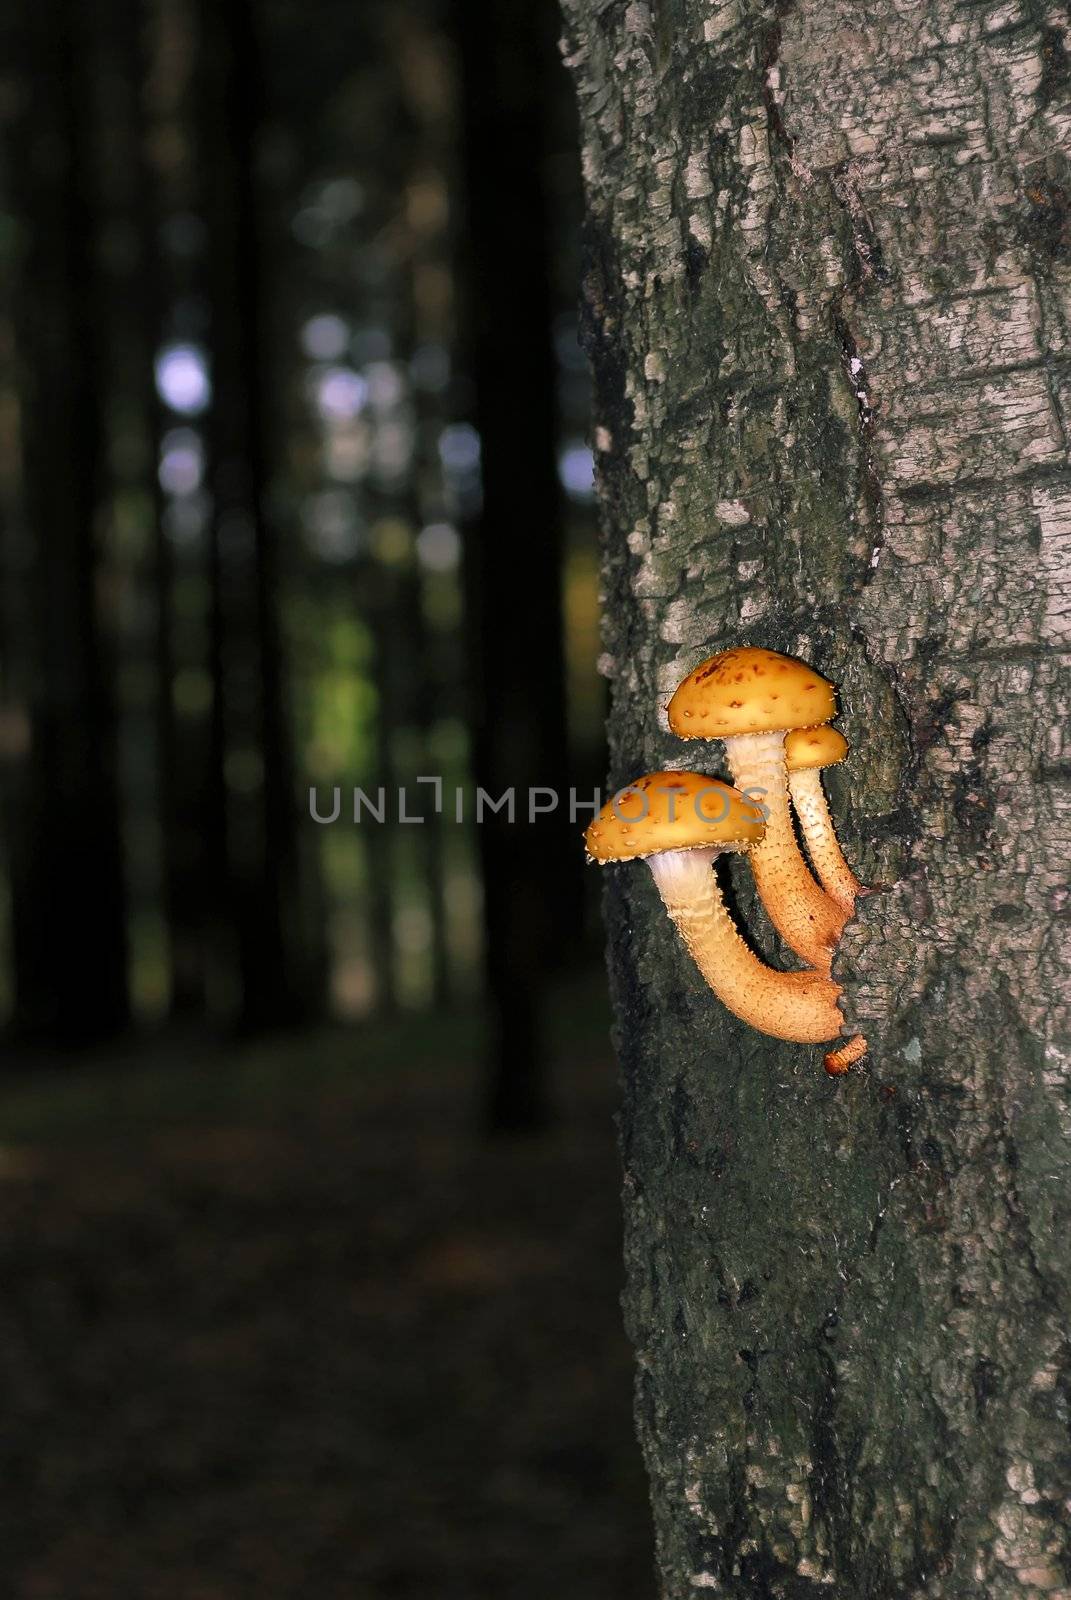 The tree mushroom growing on trunk of a birch